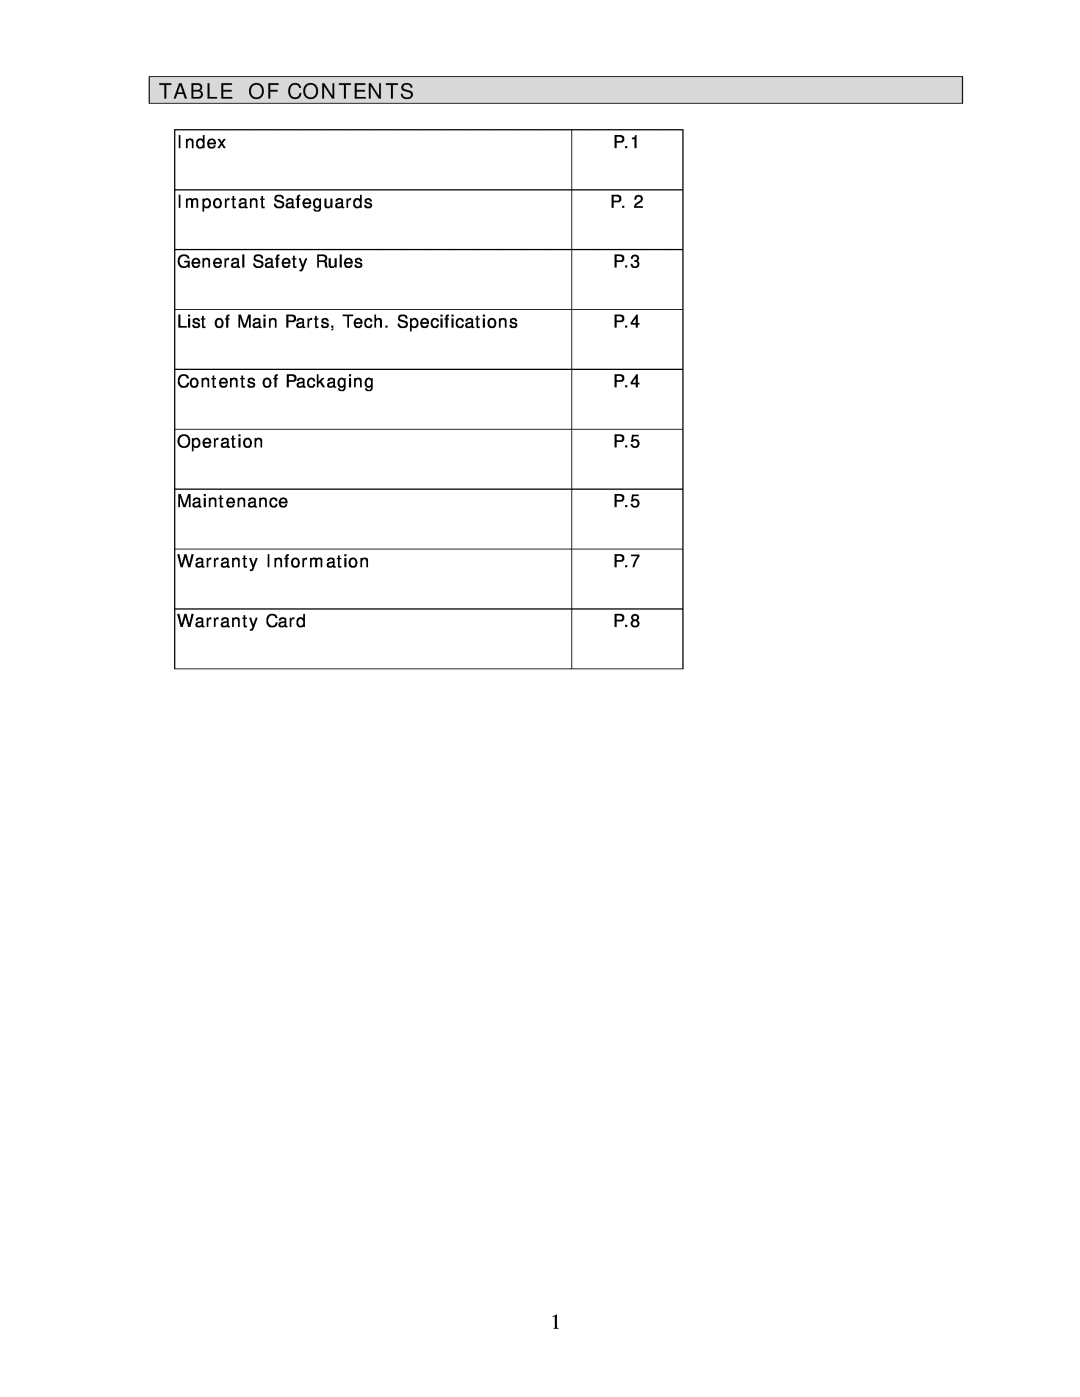 Wachsmuth & Krogmann XB6168 manual Table Of Contents 